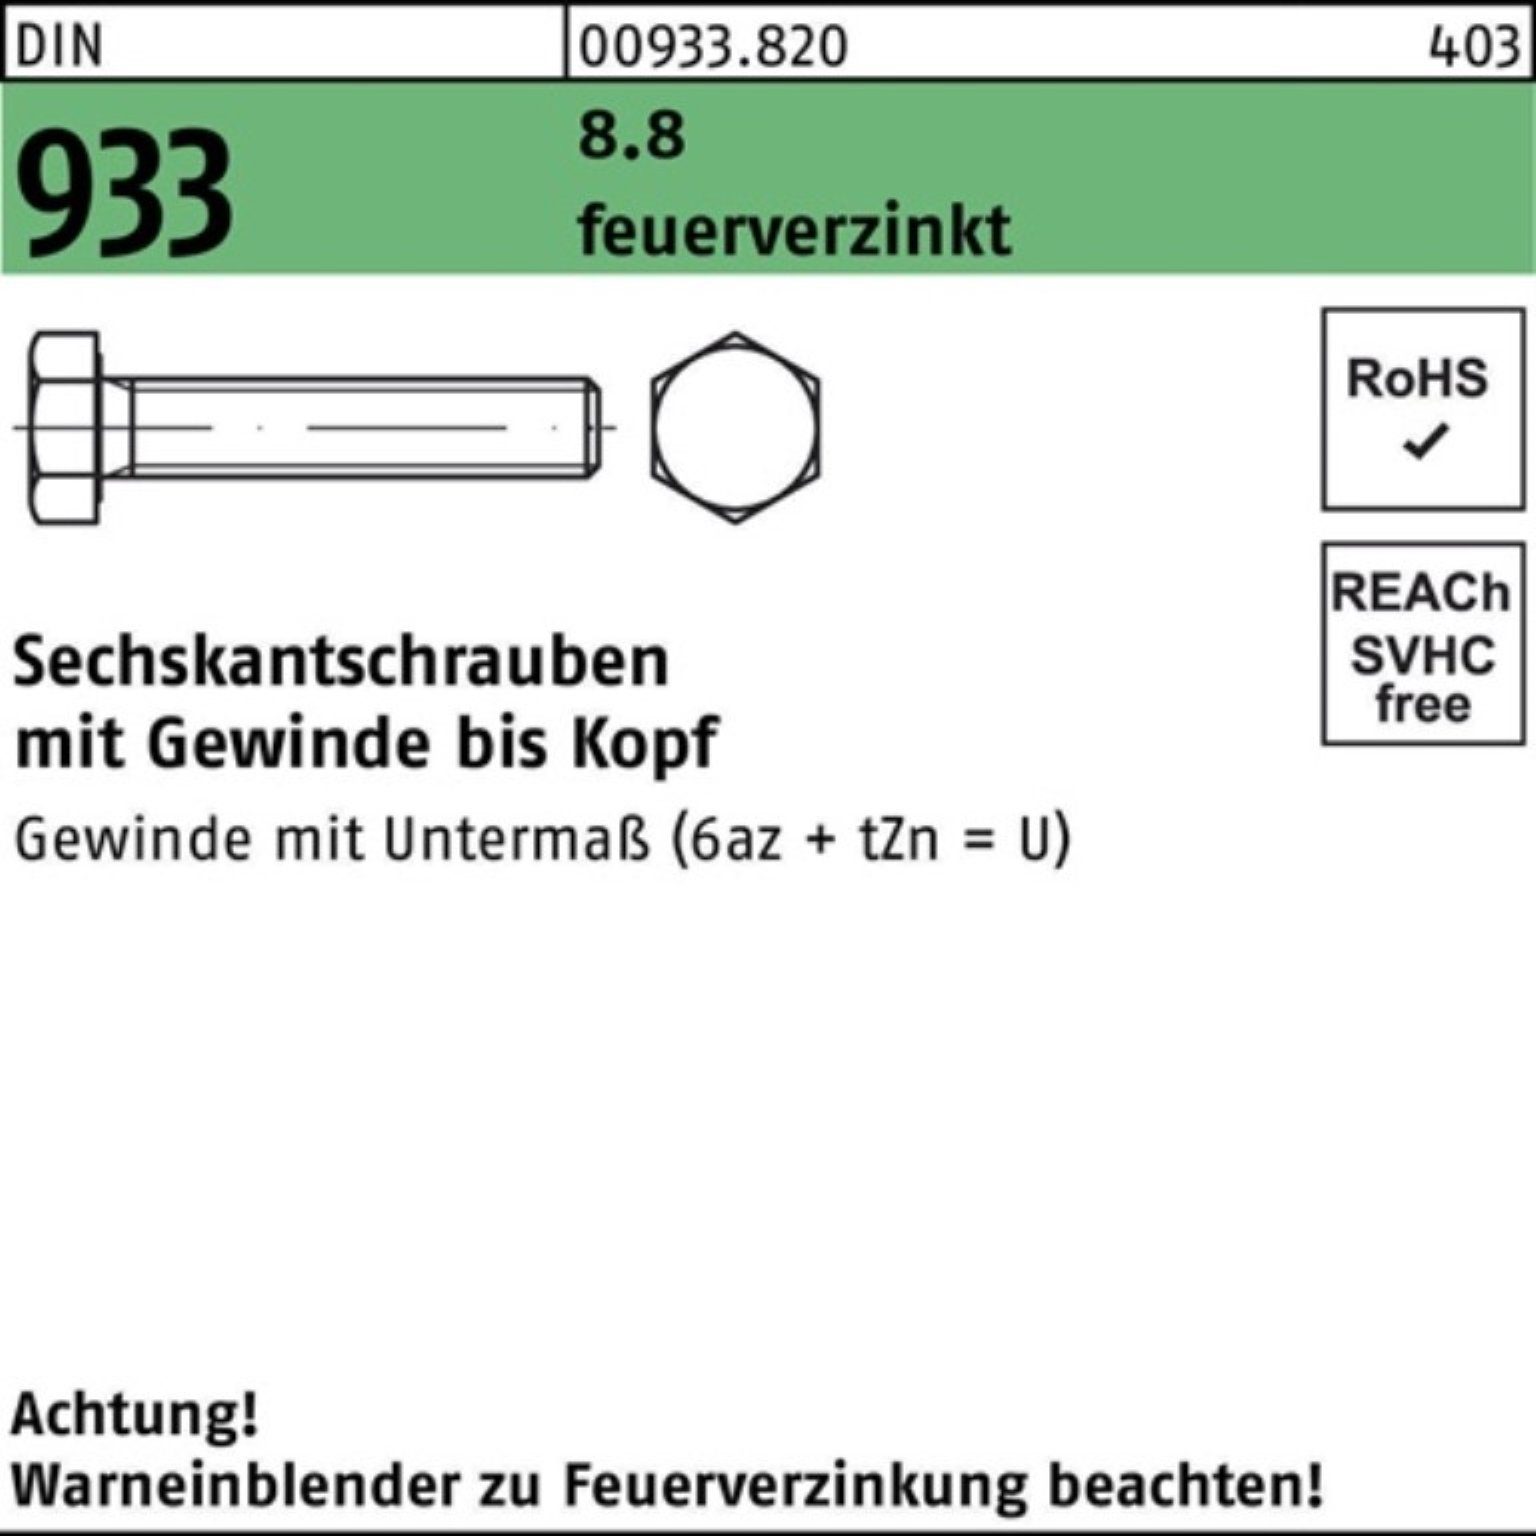 Reyher Sechskantschraube Sechskantschraube Stü 8.8 100er Pack DIN feuerverz. 933 VG 50 M12x 70